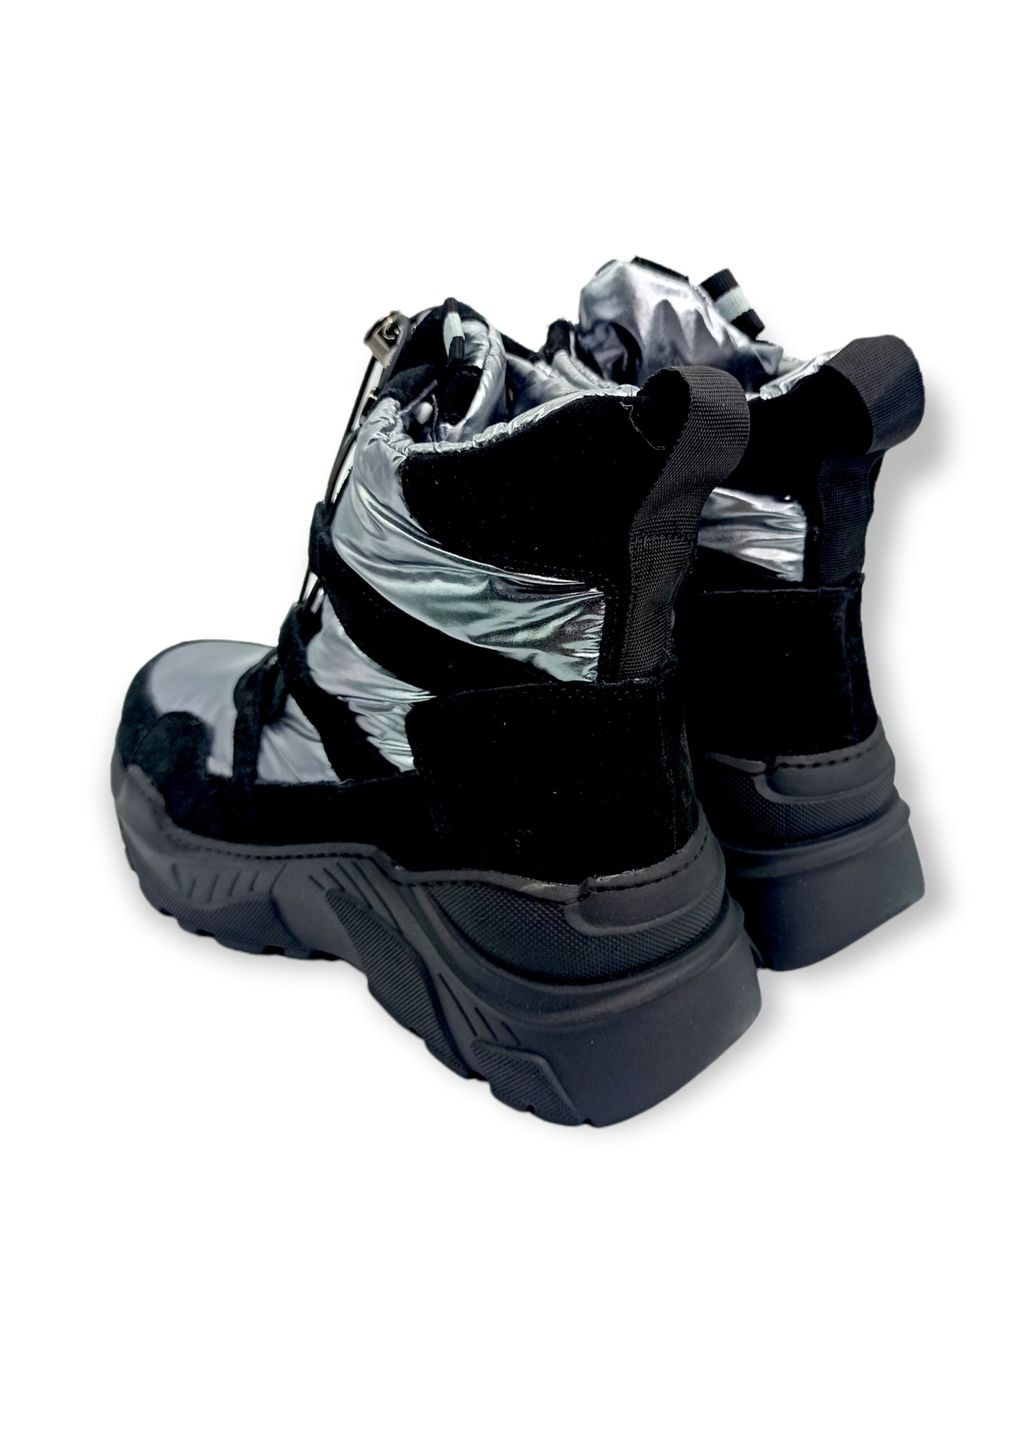 Зимние ботинки (р) нубук/текстиль 0-1-1-1627-s-707 Lonza